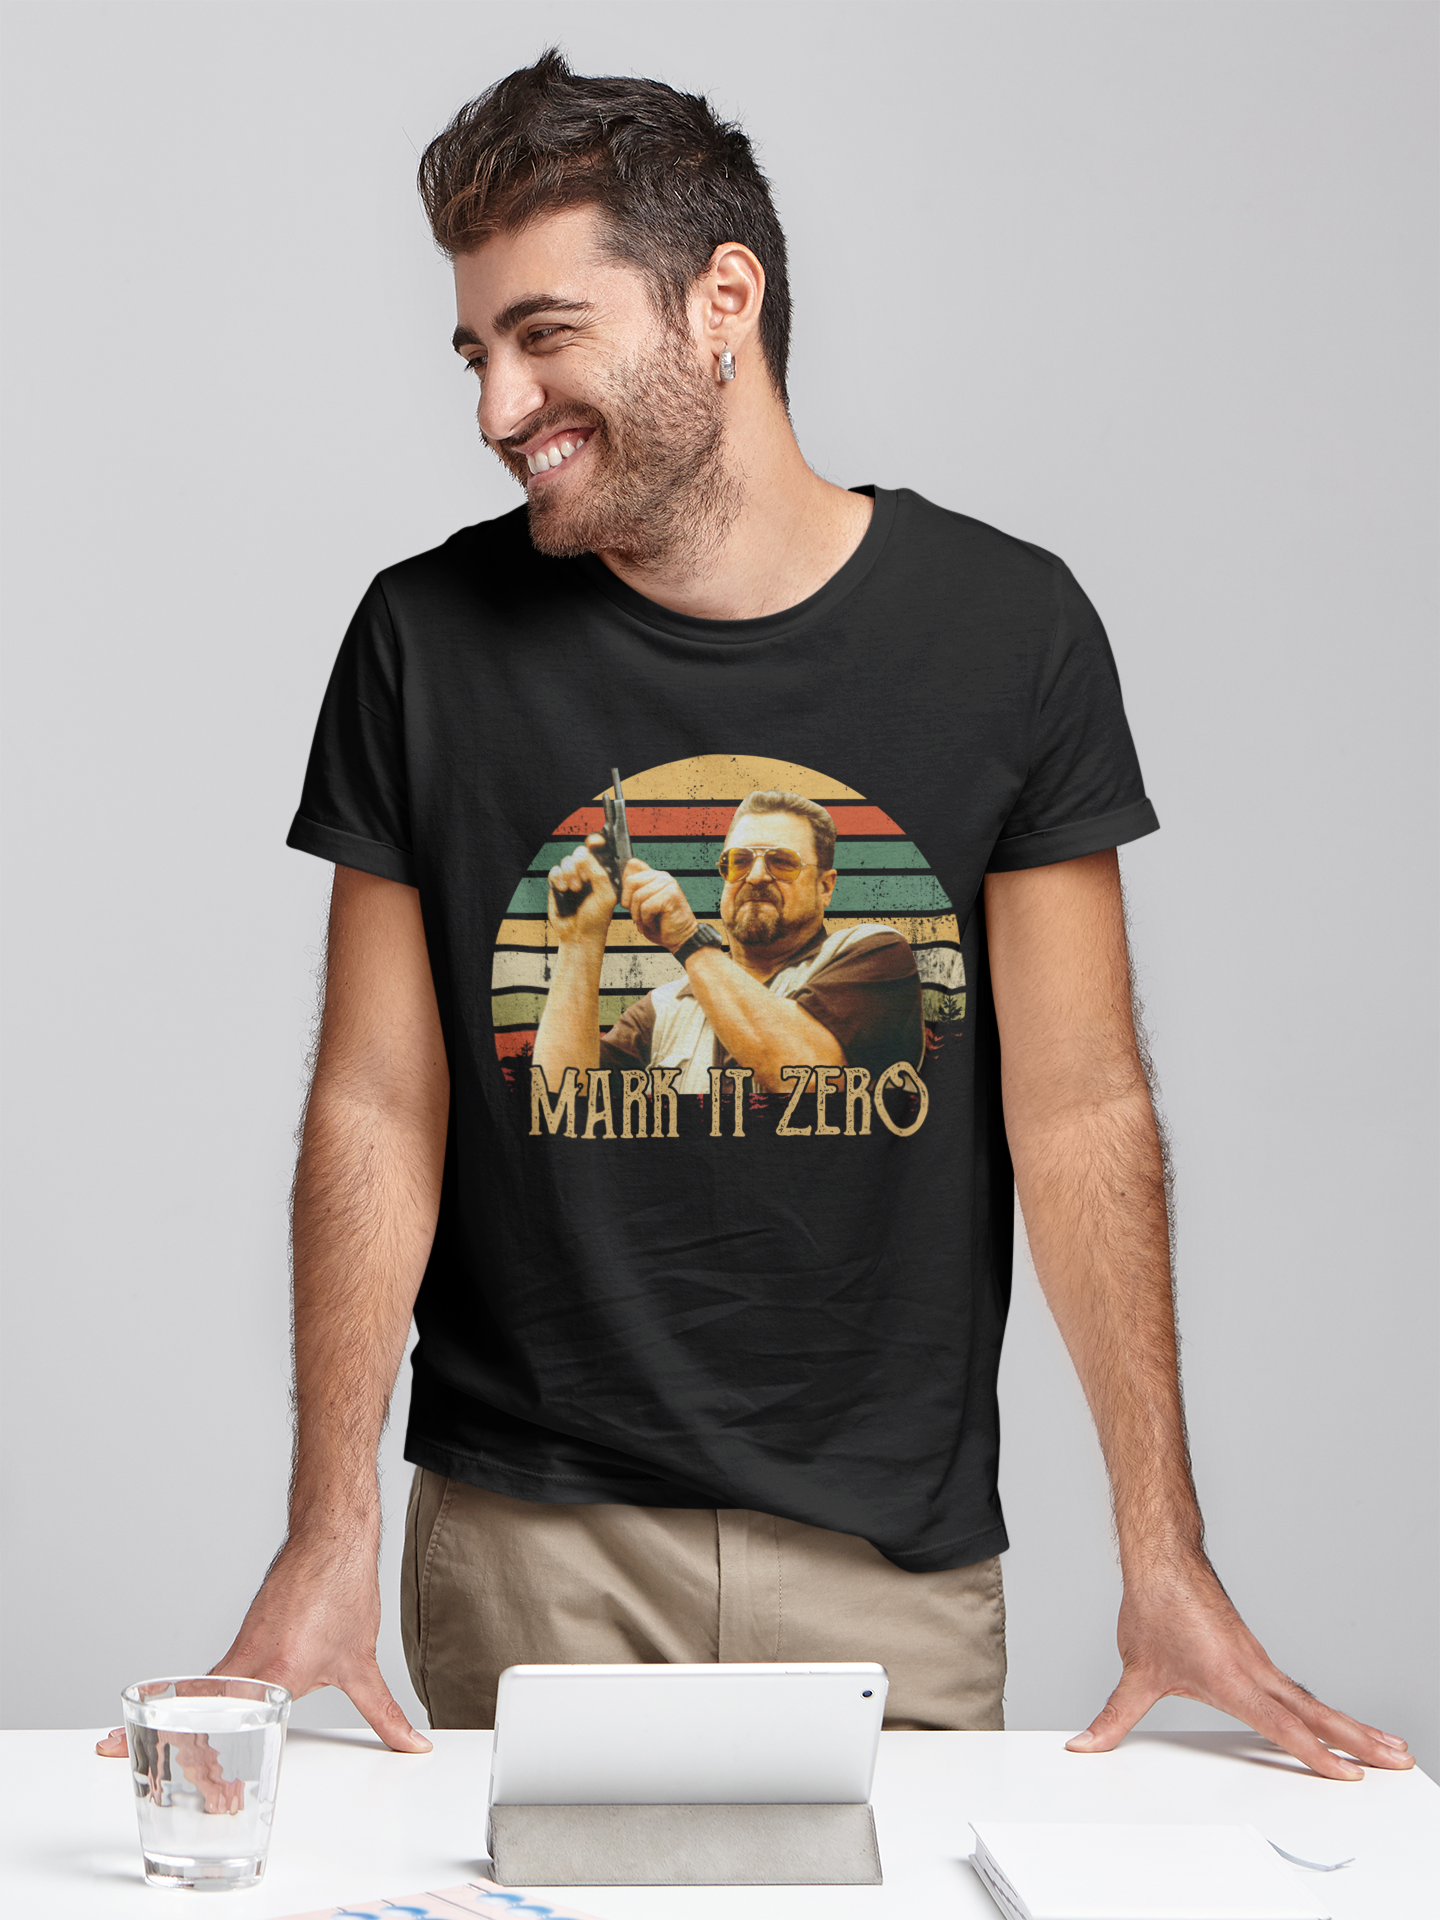 The Big Lebowski Vintage T Shirt, Mark It Zero Tshirt, Walter Sobchak T Shirt